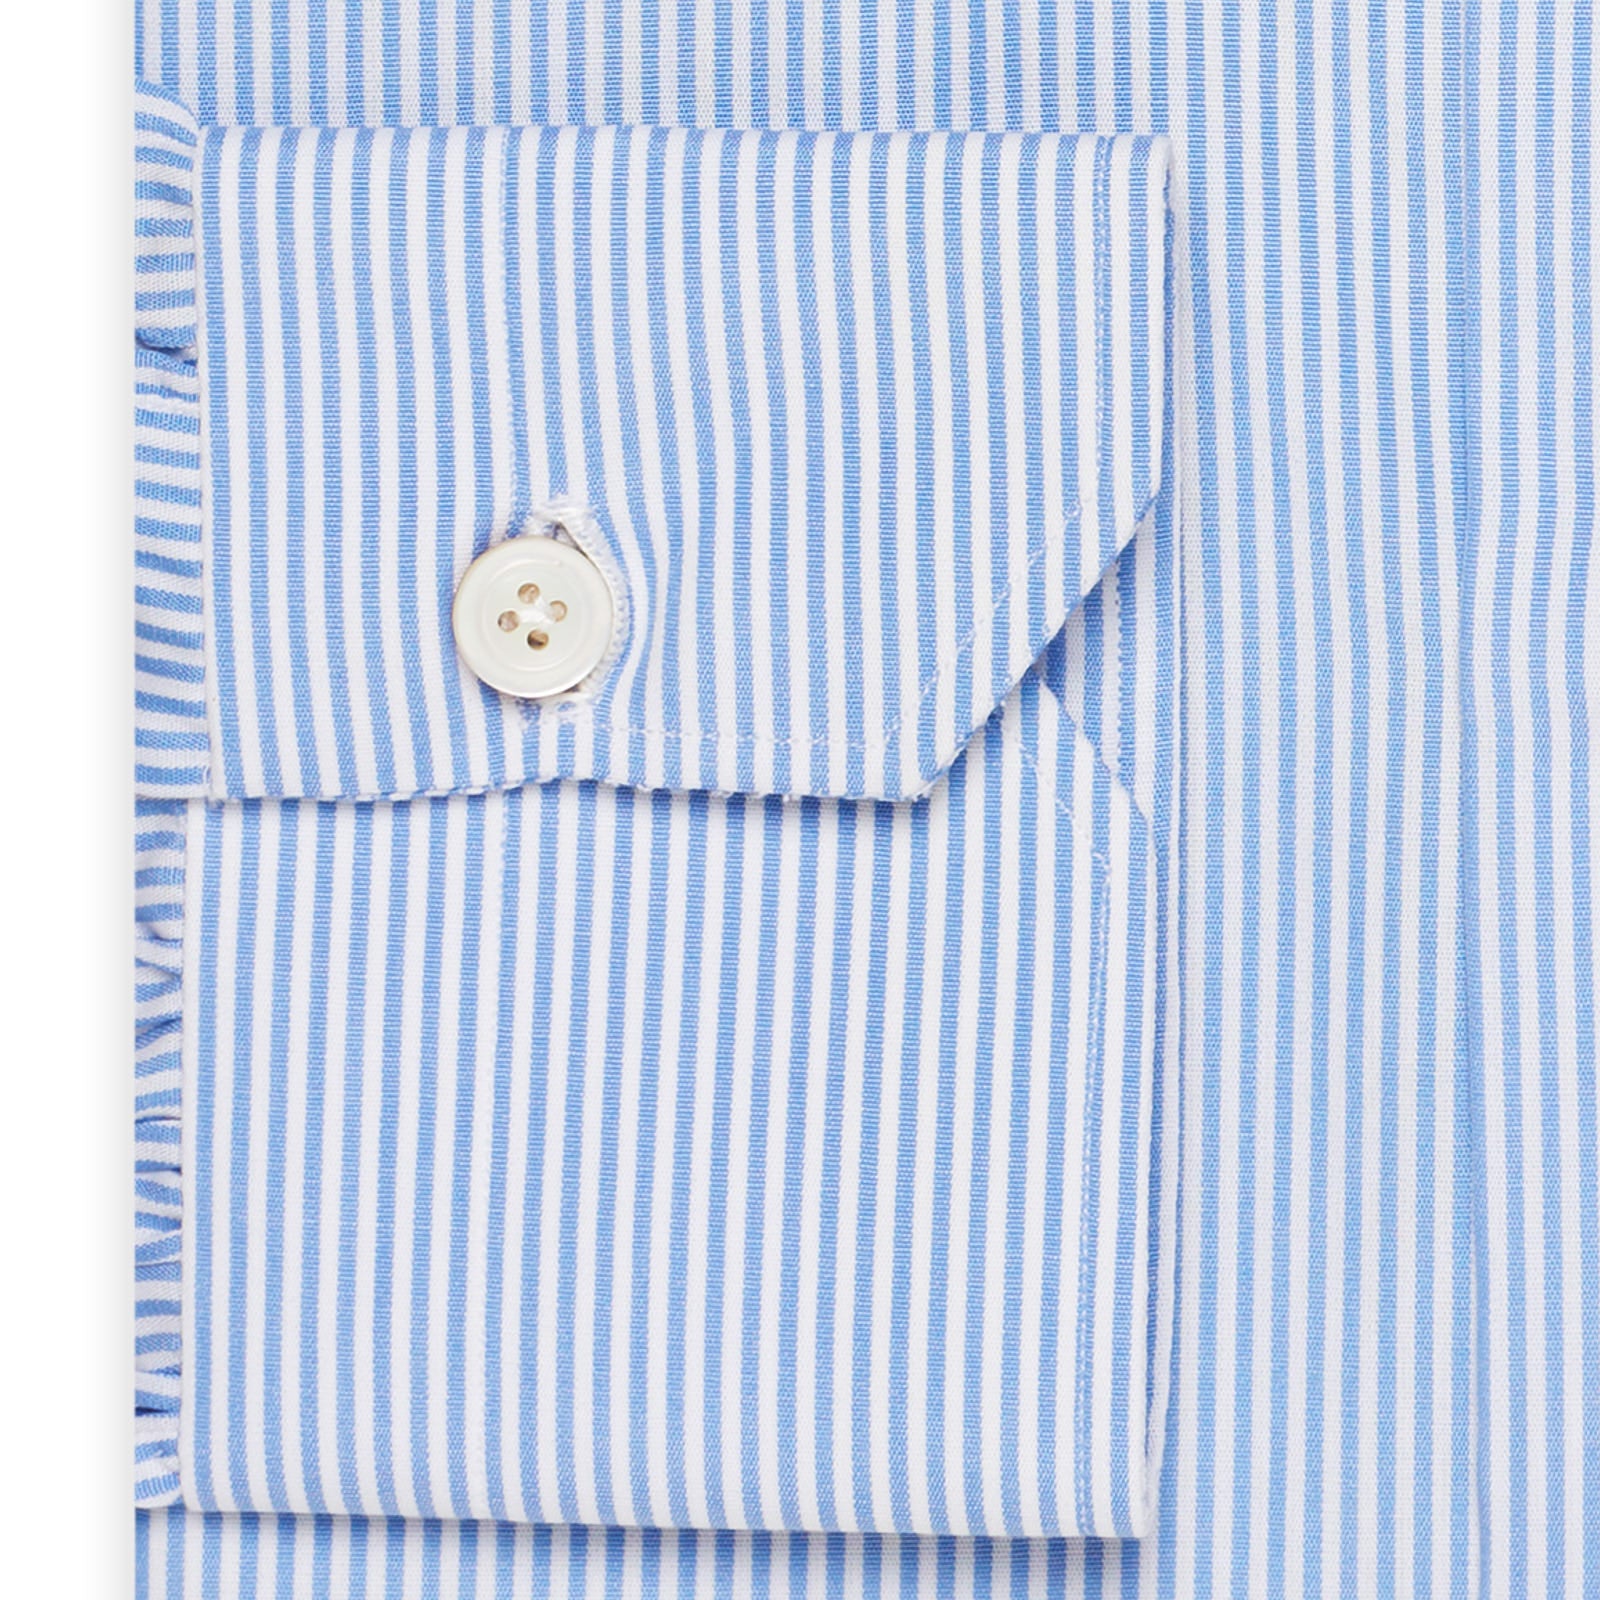 KITON Napoli Handmade Blue Striped Poplin Cotton Dress Shirt EU 40 US 15.75 NEW KITON